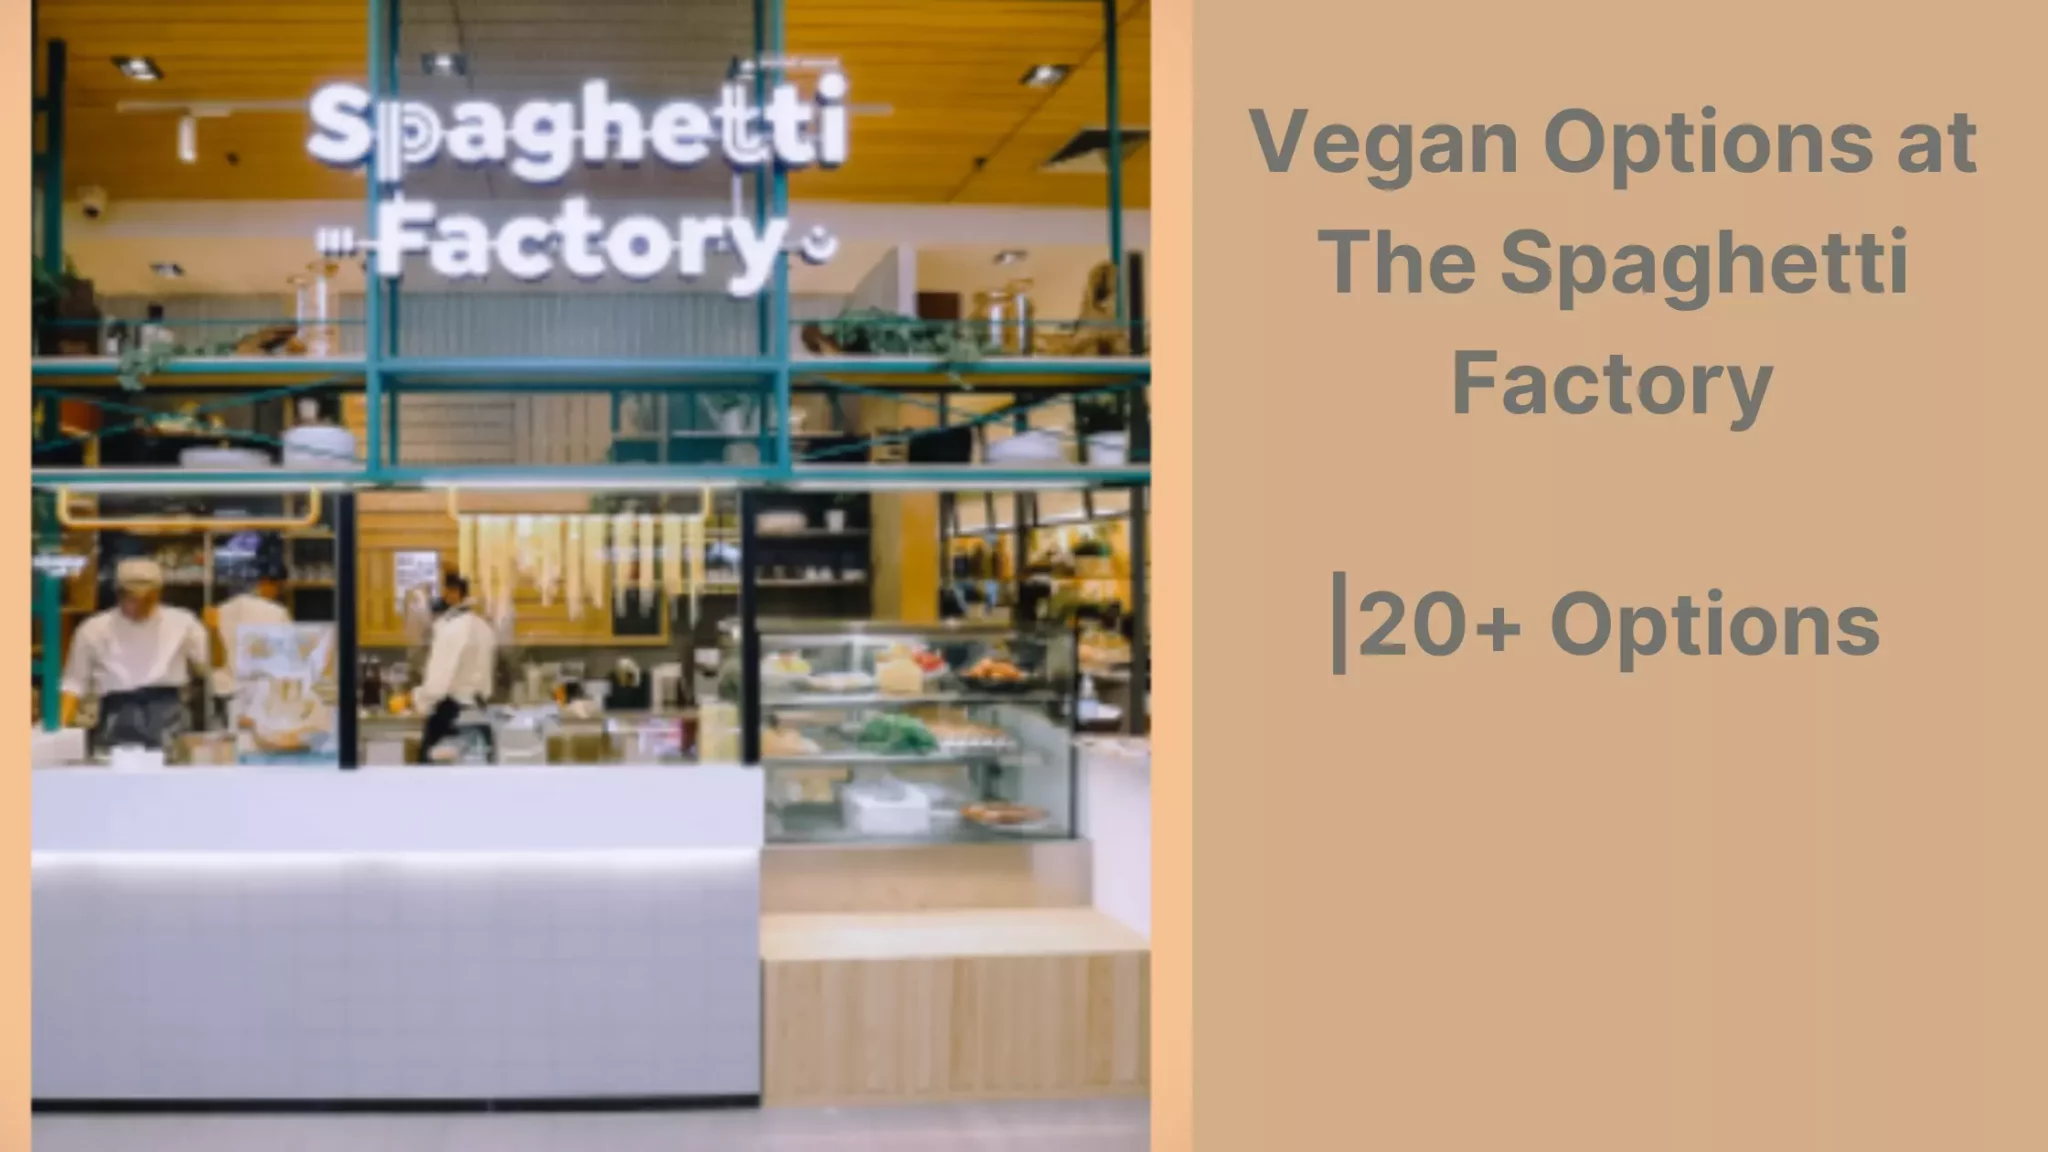 Vegan Options at The Spaghetti Factory